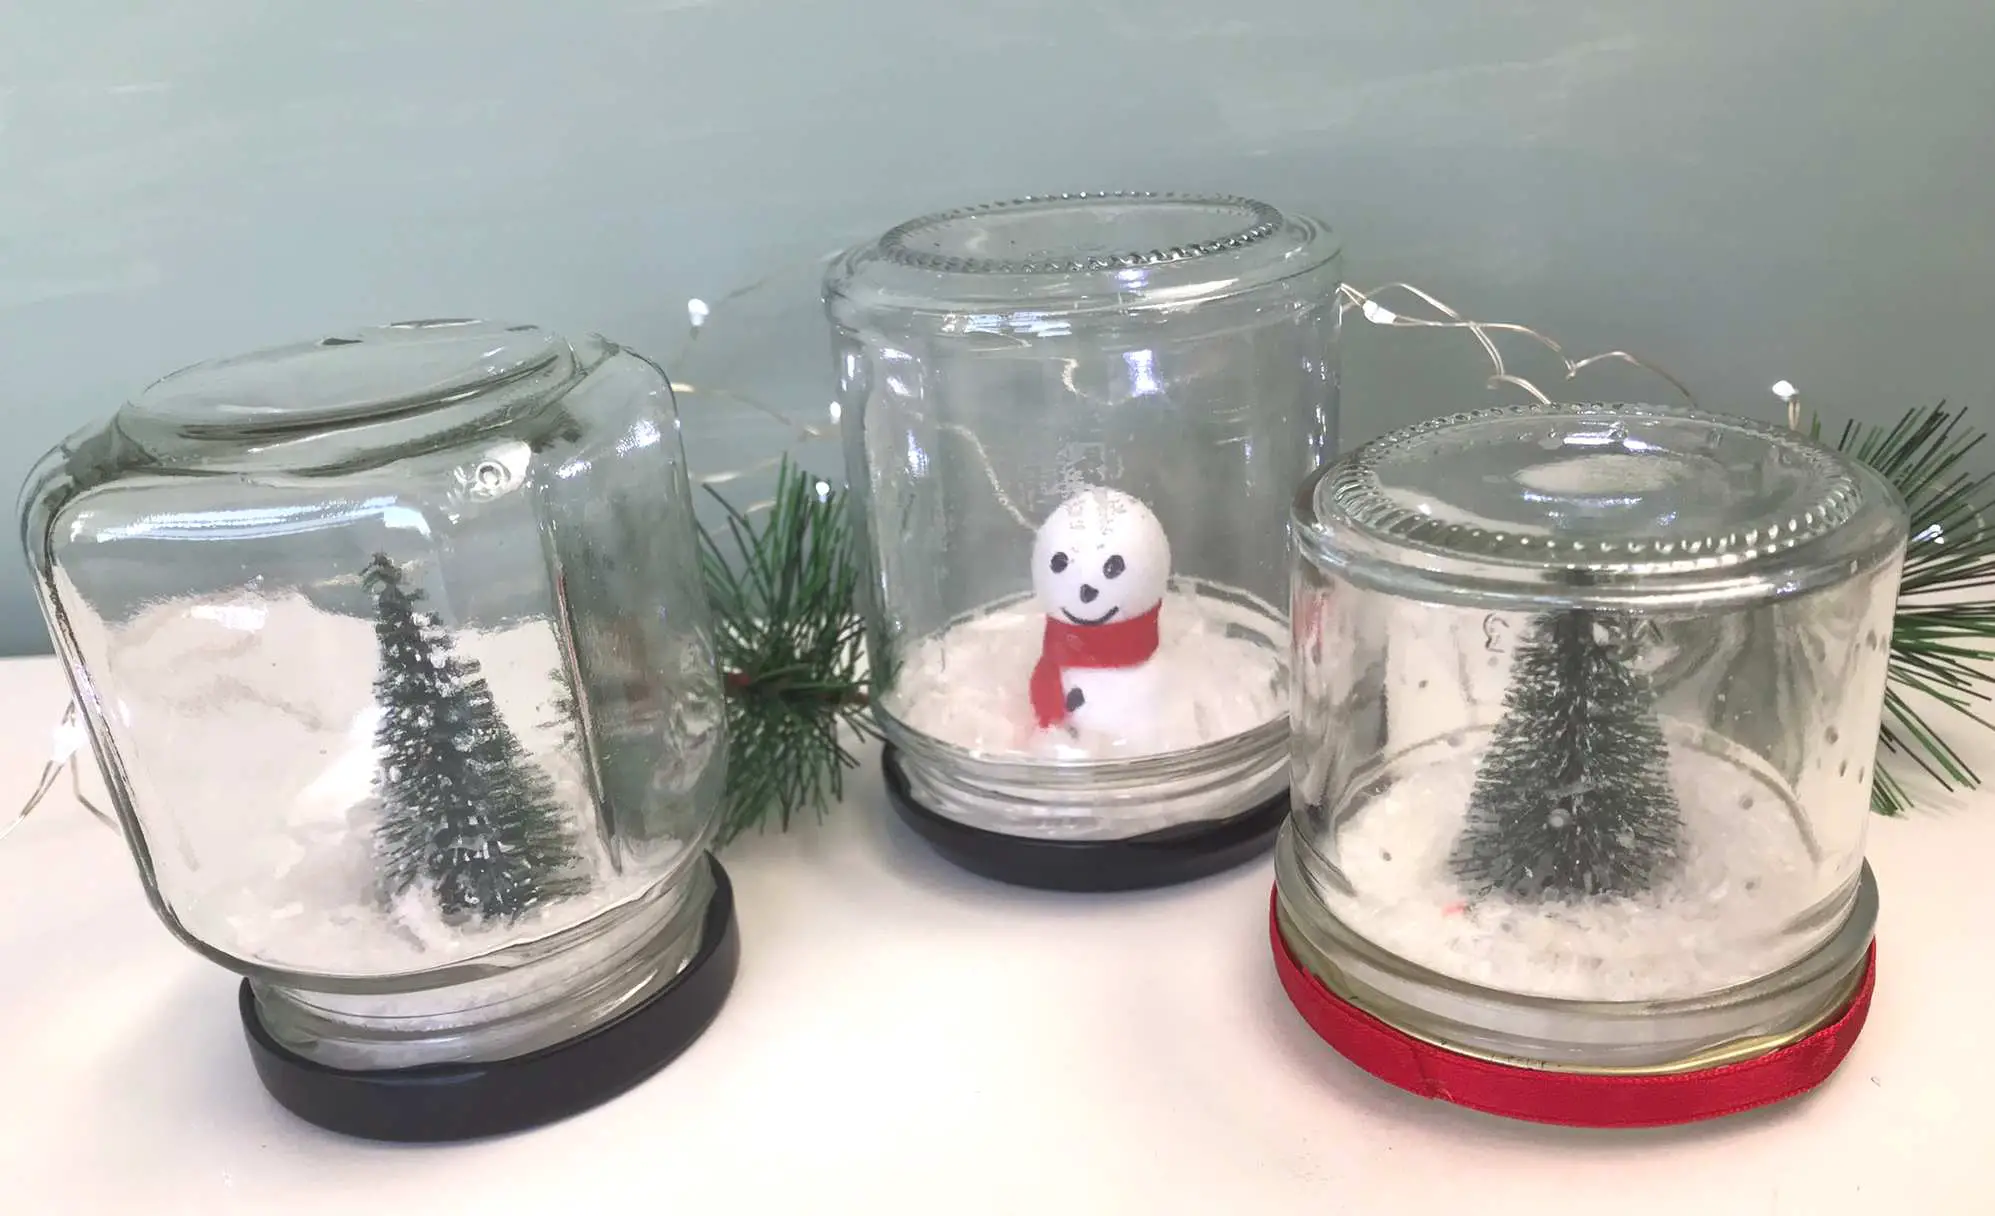 DIY Winter Snow Globes - Super Simple